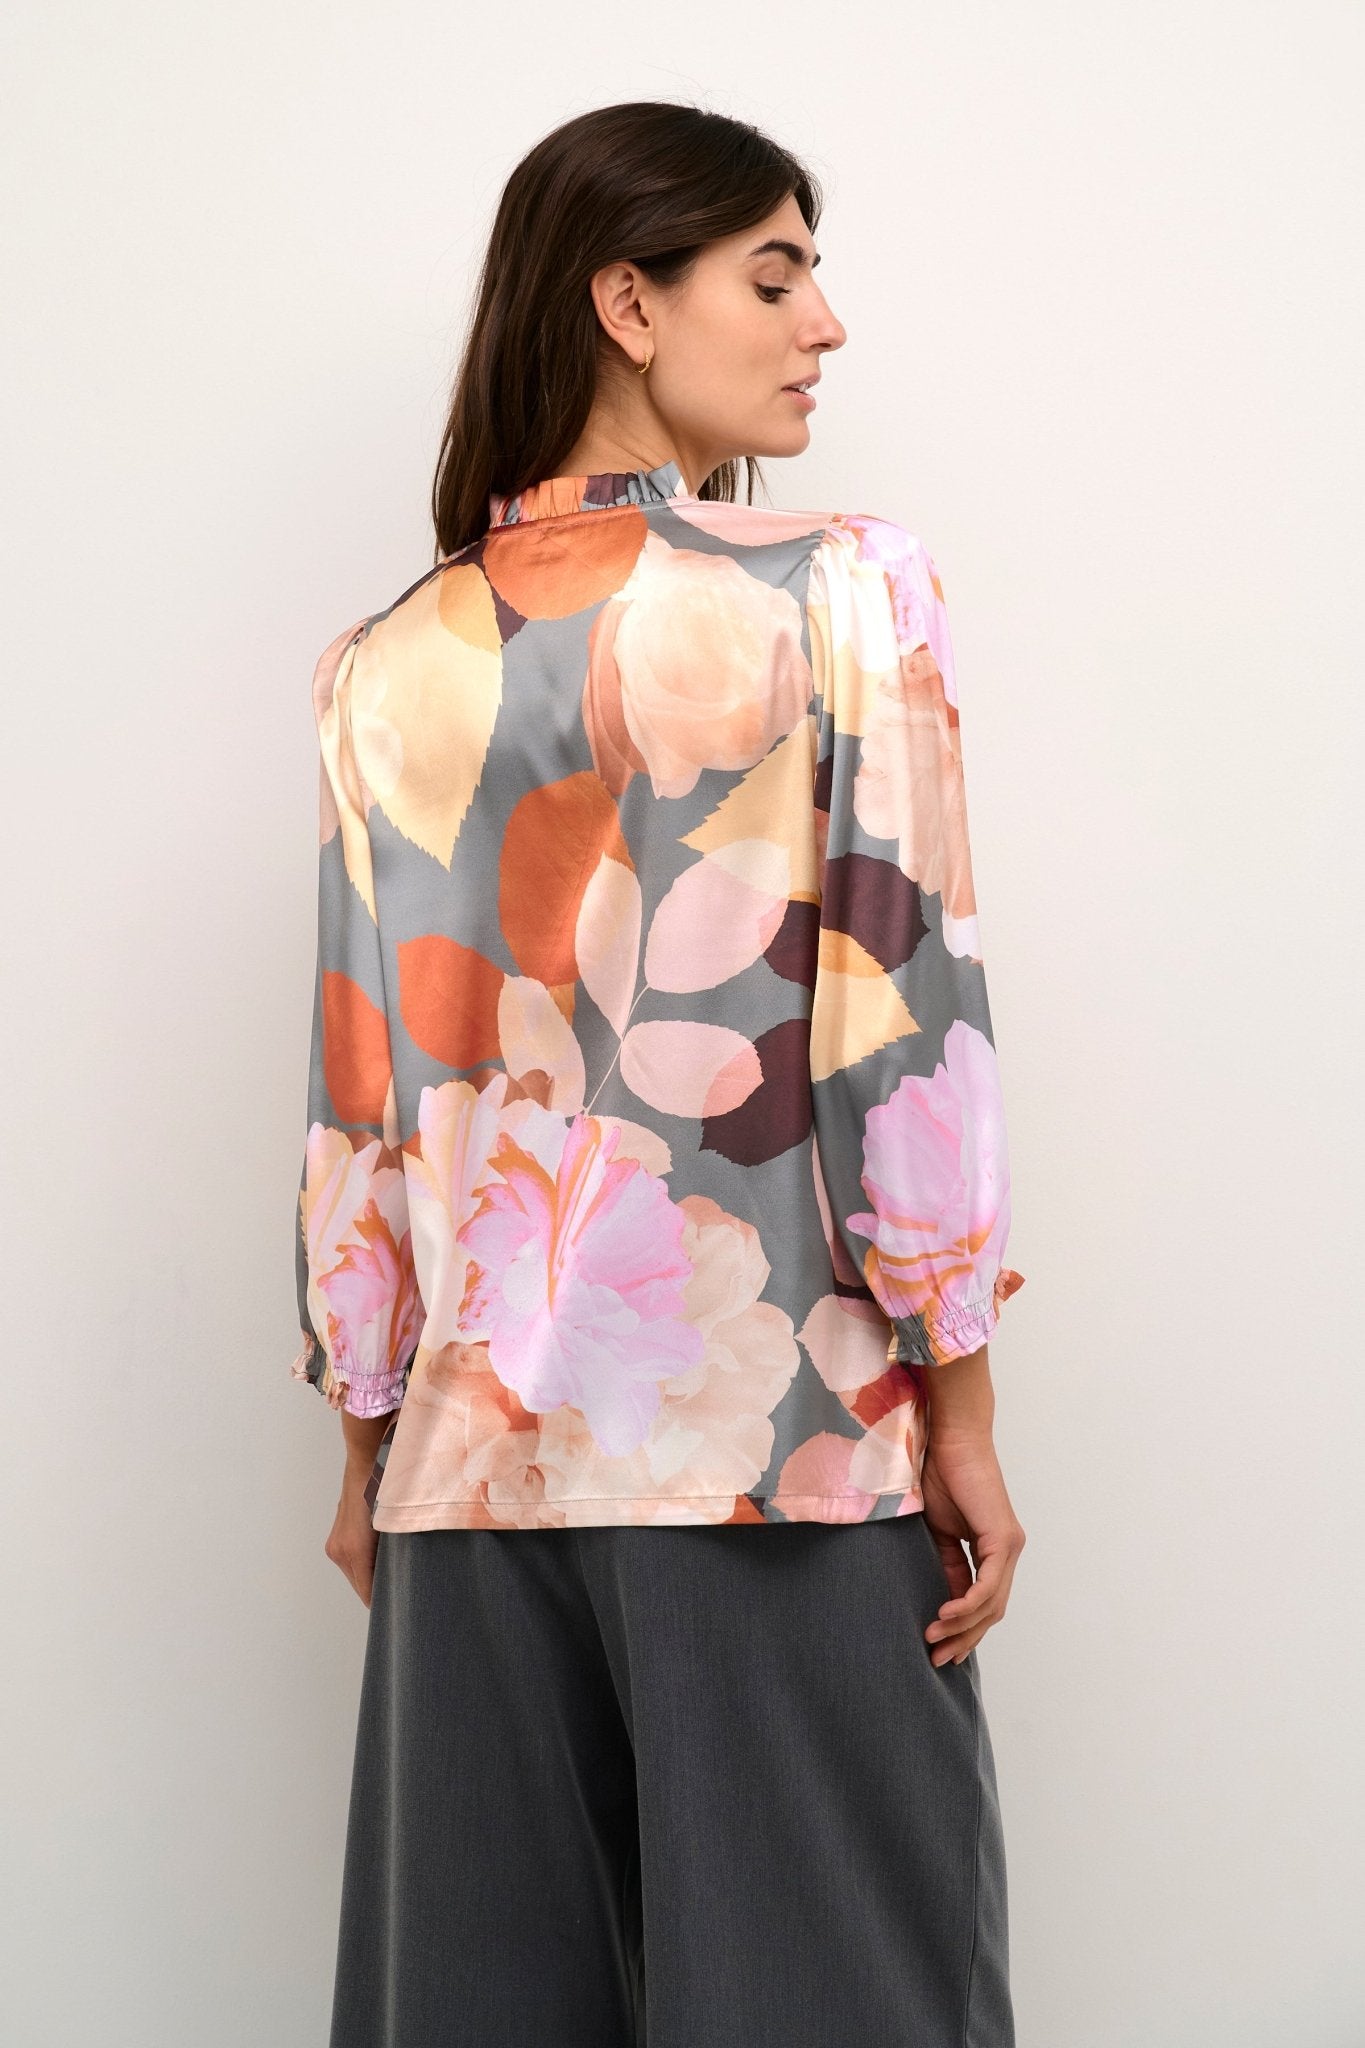 Moma 3/4 sleeve blouse by Culture - castlerock - Blue Sky Fashions & Lingerie